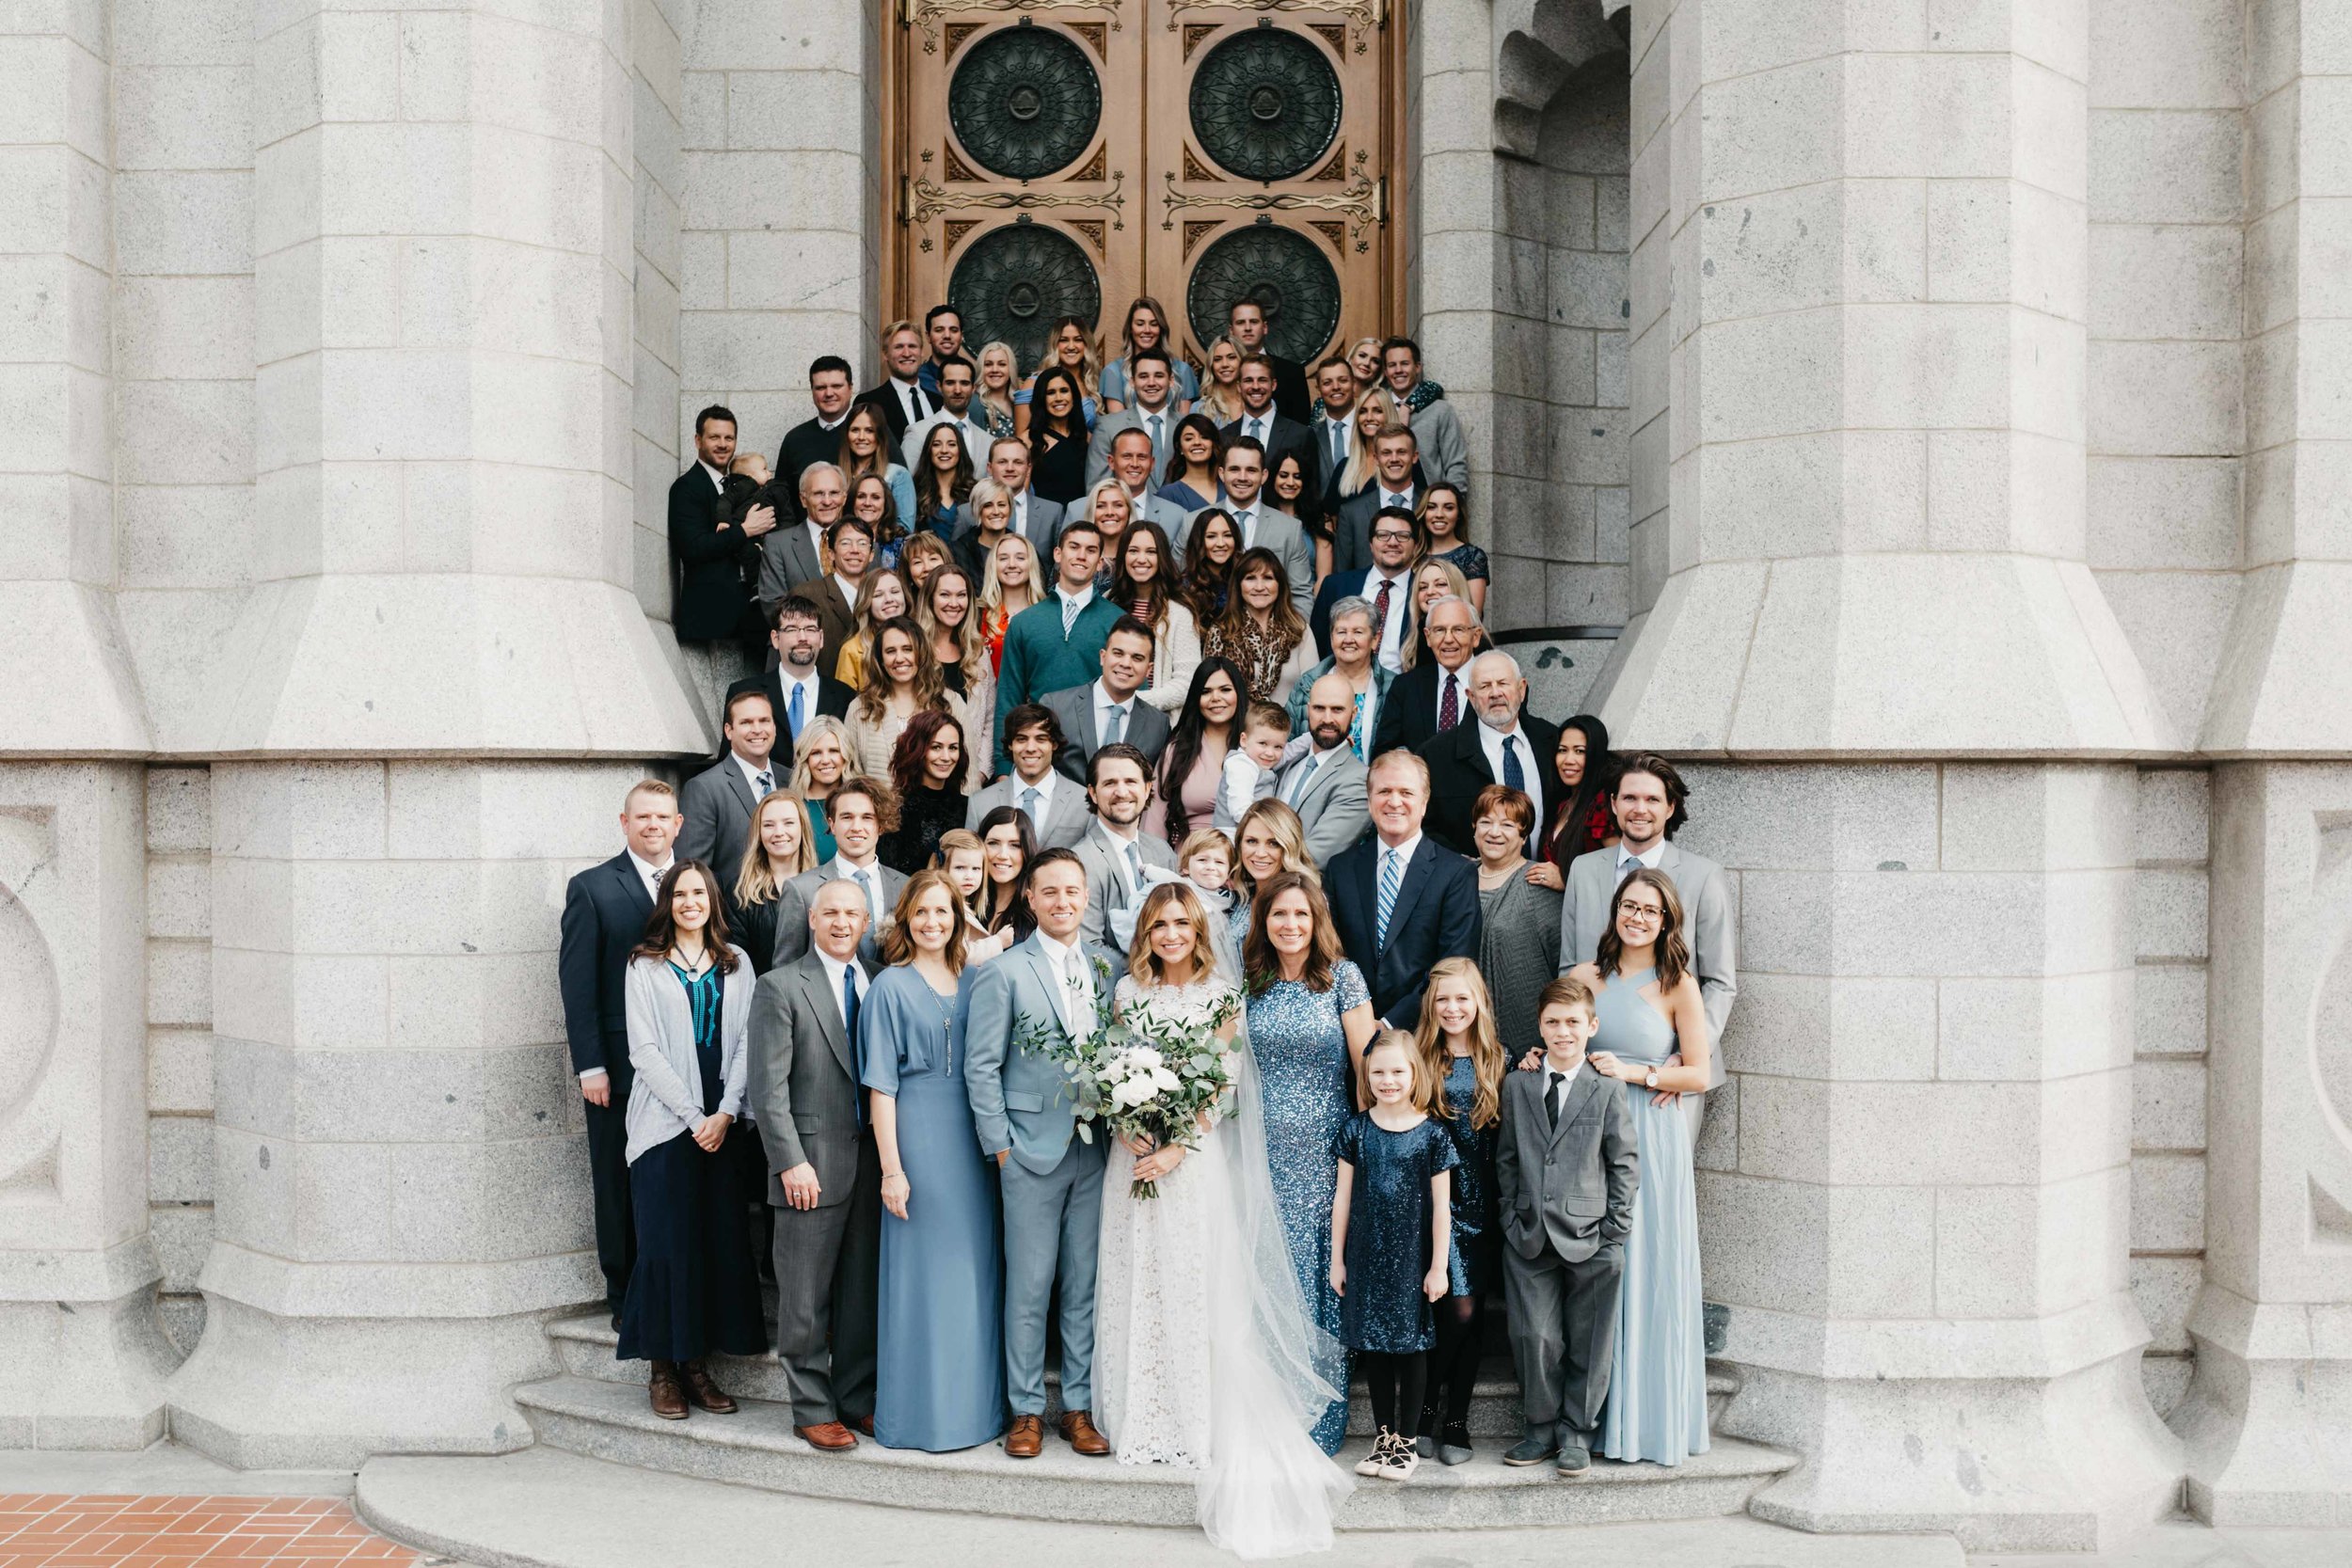 Utah-Wedding-Photographer-13.jpg